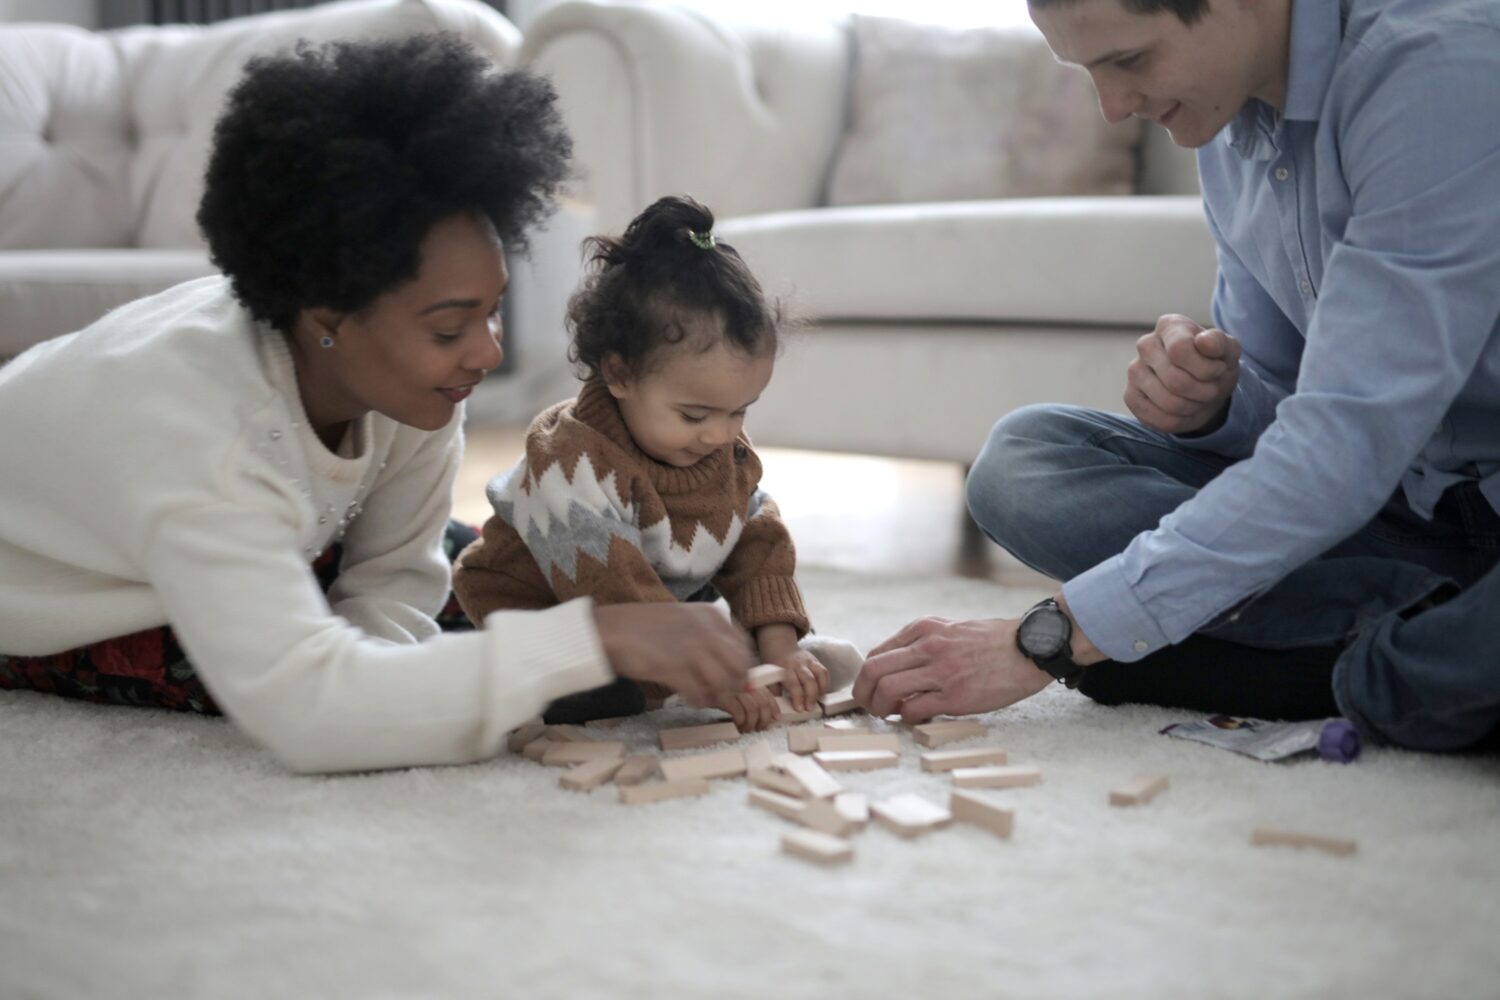 Family plays with blocks on light carpet